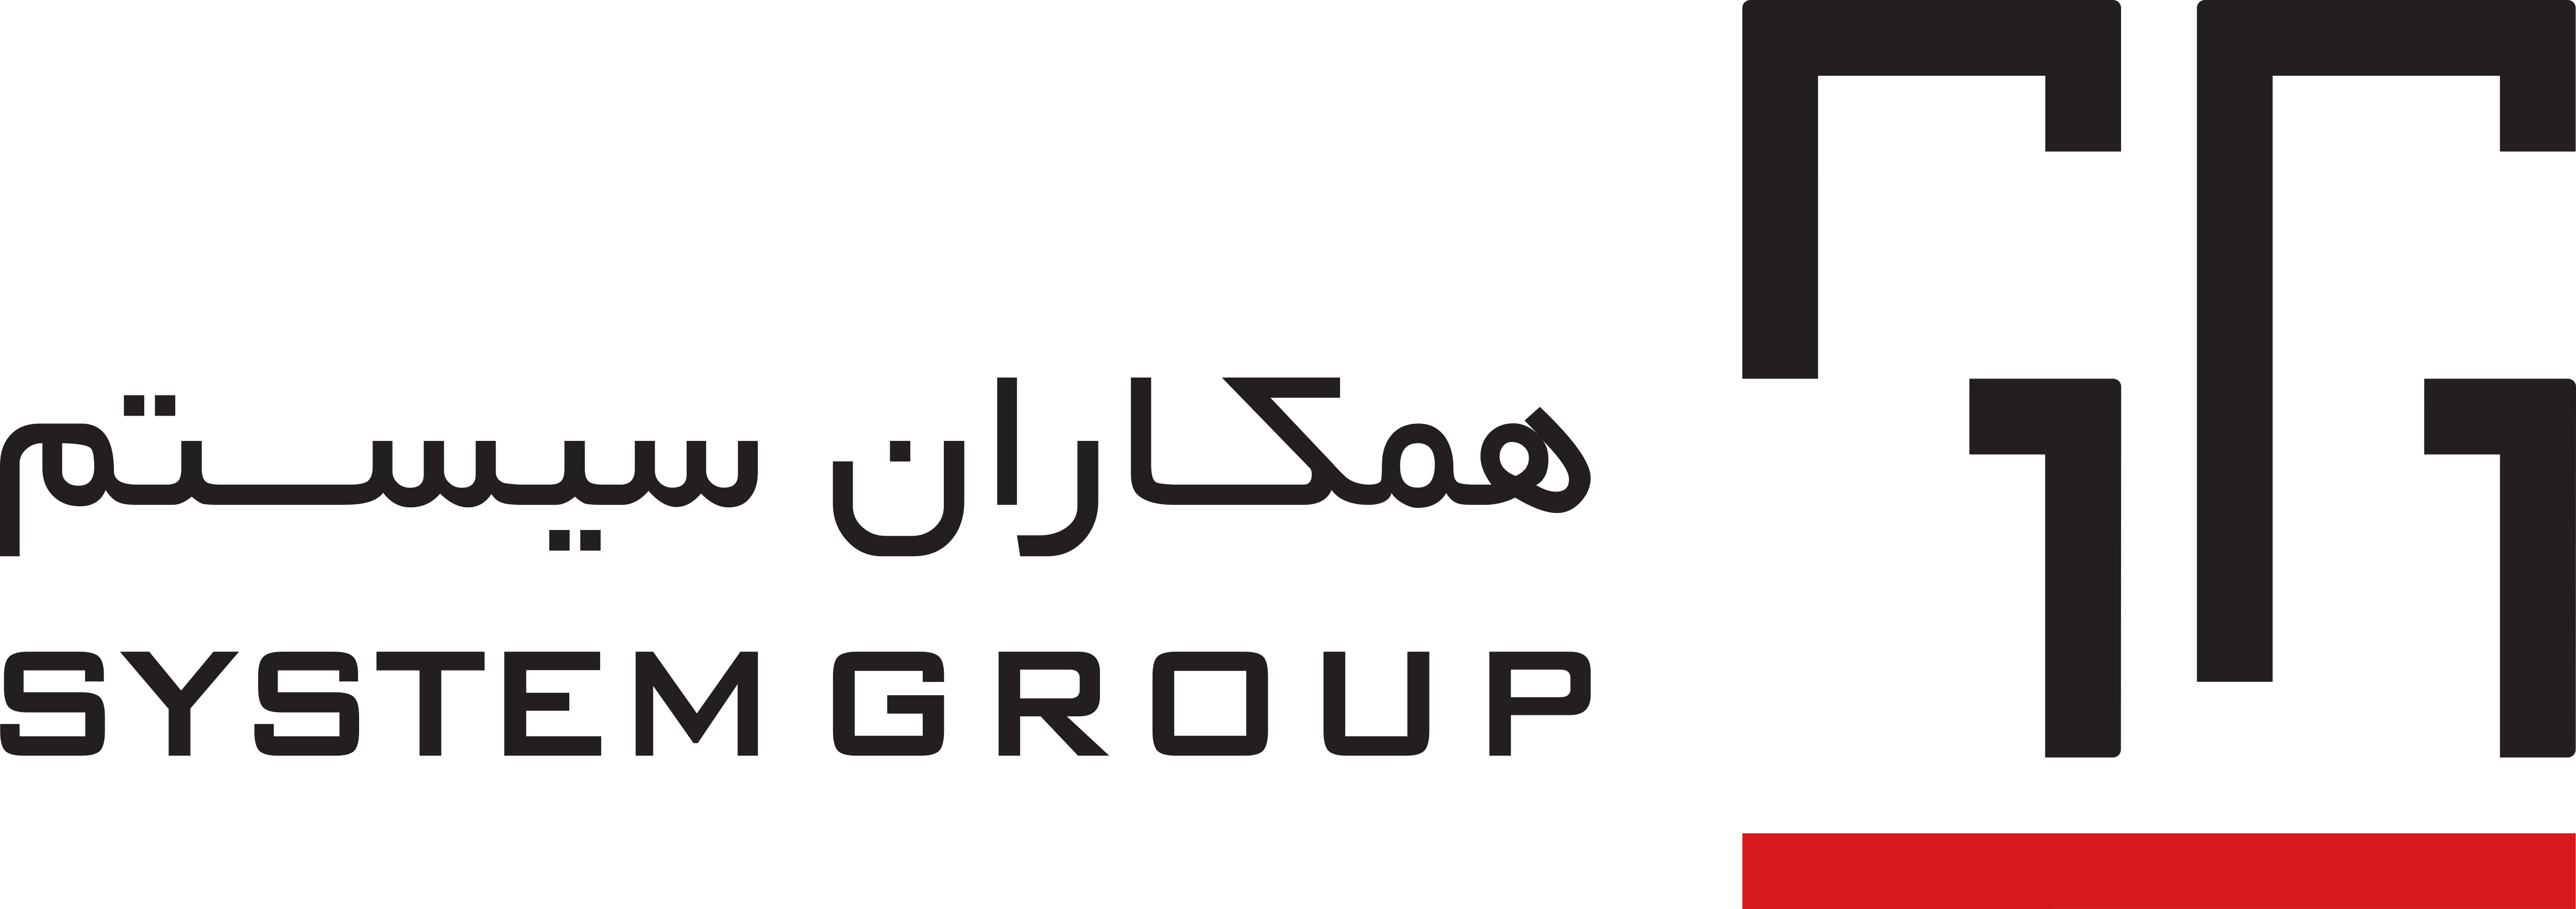 System Group – Logos Download